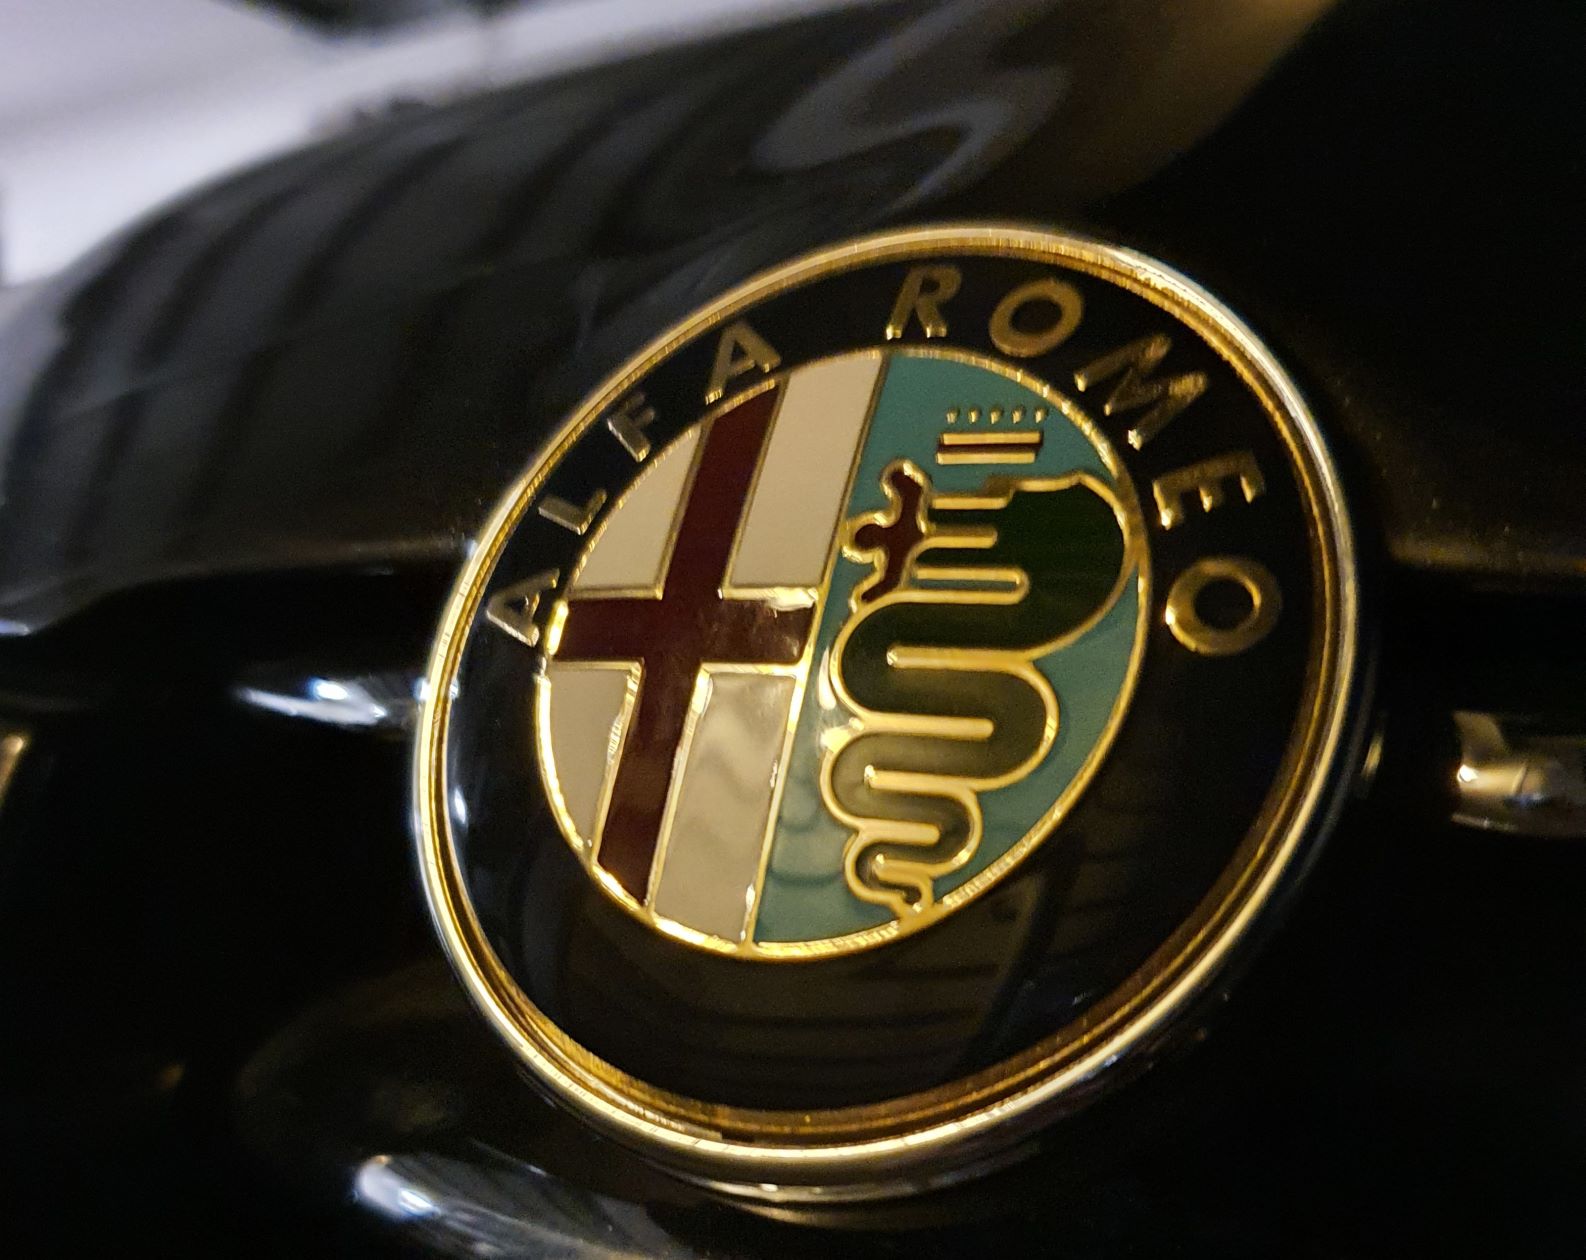 The Alfa Romeo logo